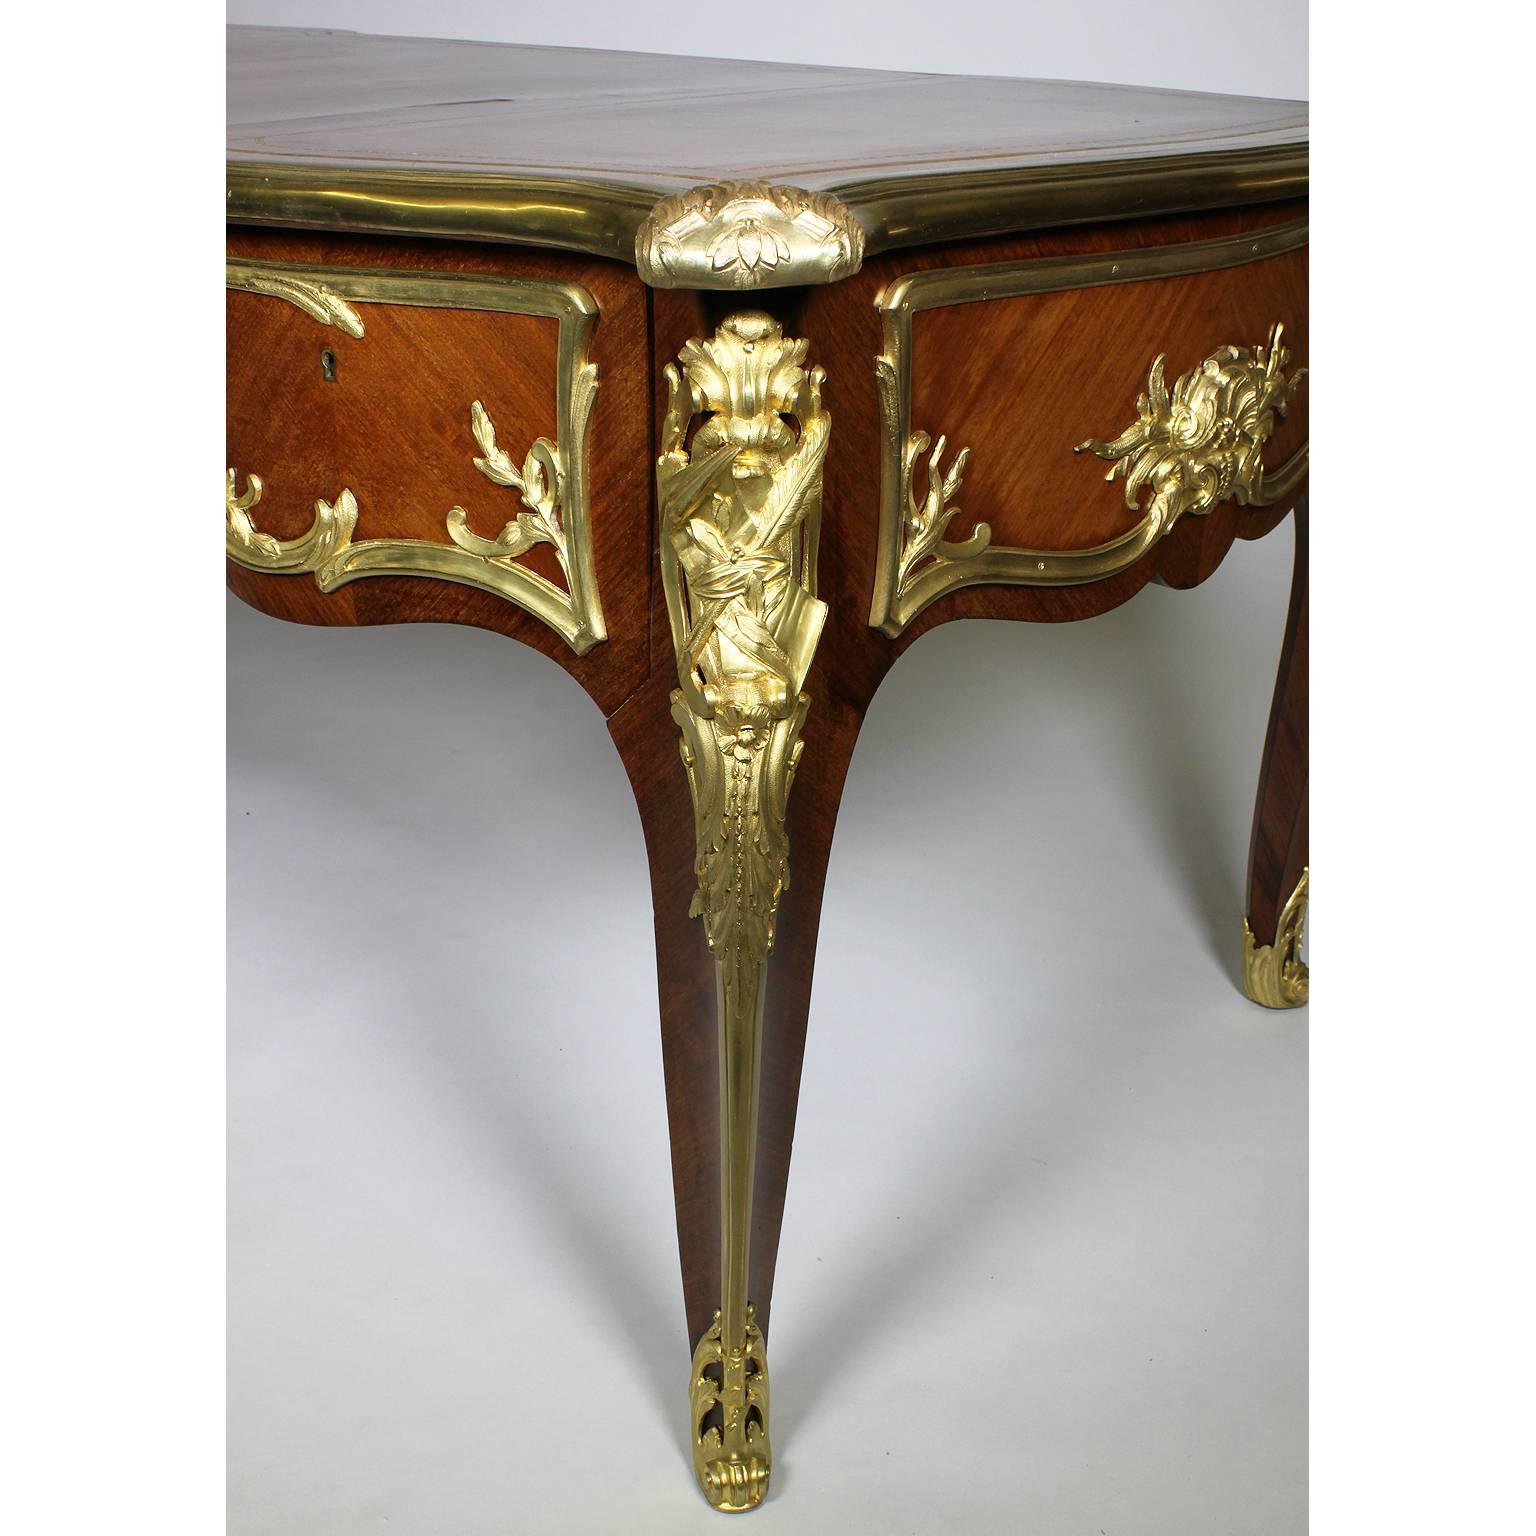 French Louis XV Style Gilt Bronze-Mounted Kingwood Three-Drawer Bureau Plat Desk For Sale 3